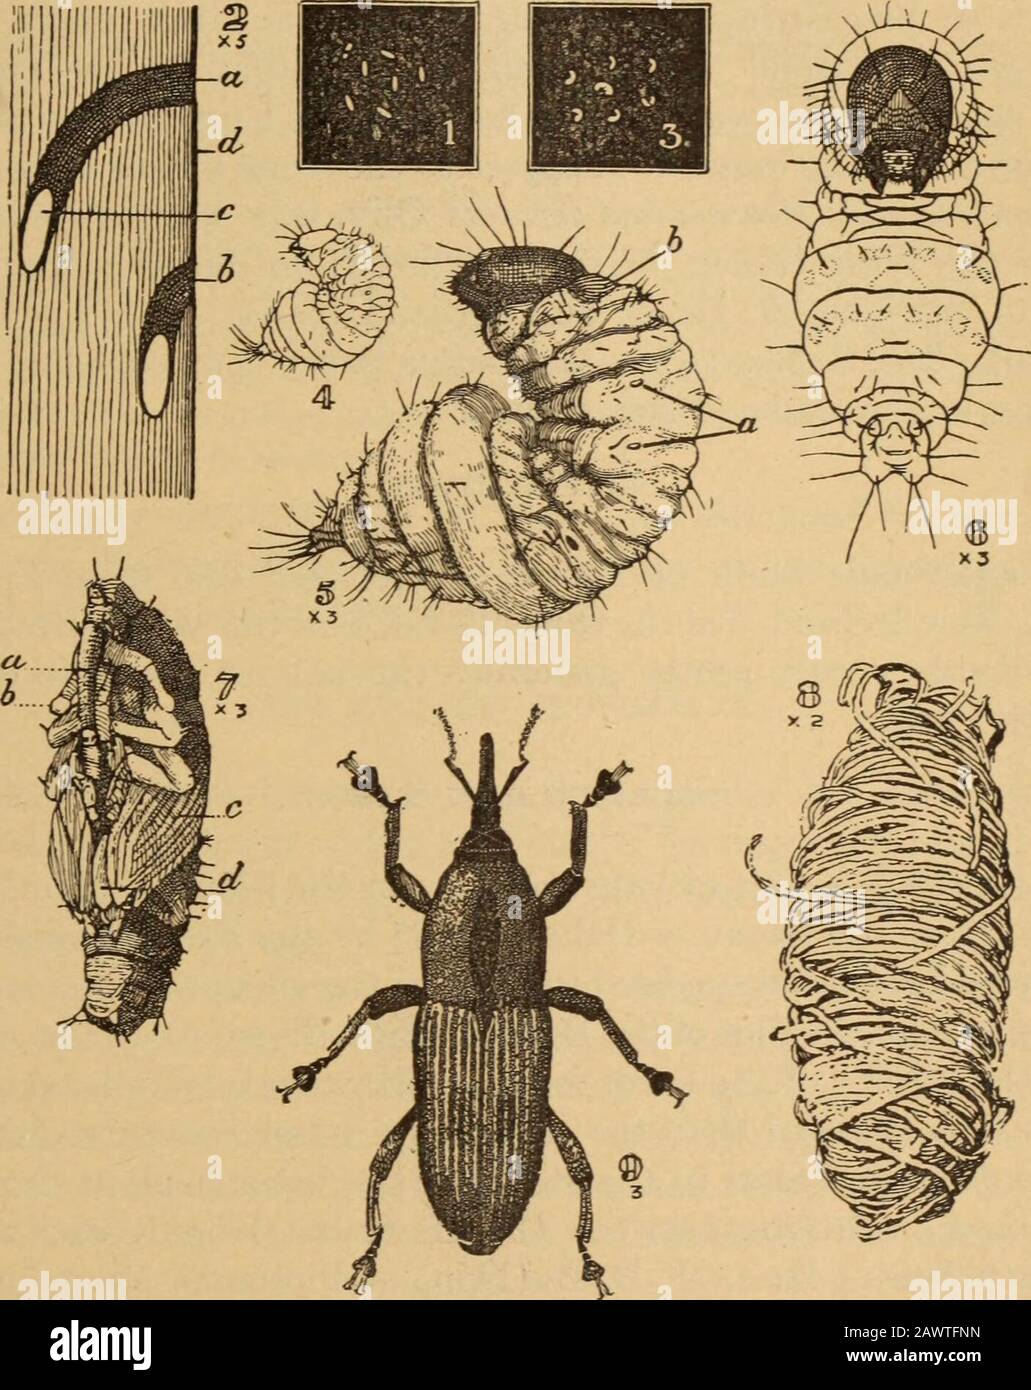 The Sugar-Cane Insects of Hawaii . ra and is a member of the same family of insects as theHawaiian sugar-cane and the corn leafhoppers.6 Three further spe-cies of this same family, the Fulgorida?, are recorded as sugar-canepests in Java by W. van Deventer.c o Quaintaxce, A. L.—Fla. Agr. Exp. Sta., Bui. 45, 1898. b Westwood, J. 0.—Mag. Nat. Hist., vol. 6. p. 407. 1841. c Phenice maculosa, Dicranotropis vastatrix, and Eumetopinn hrugt ri. Van Deventer,Handboek ten dienste van de Suikerriet-cultuur en de Rietsuiker-Fabricage op JavaII. De Dierlijke vijanden van het Suikerriet en hunne Parasieten. Stock Photo